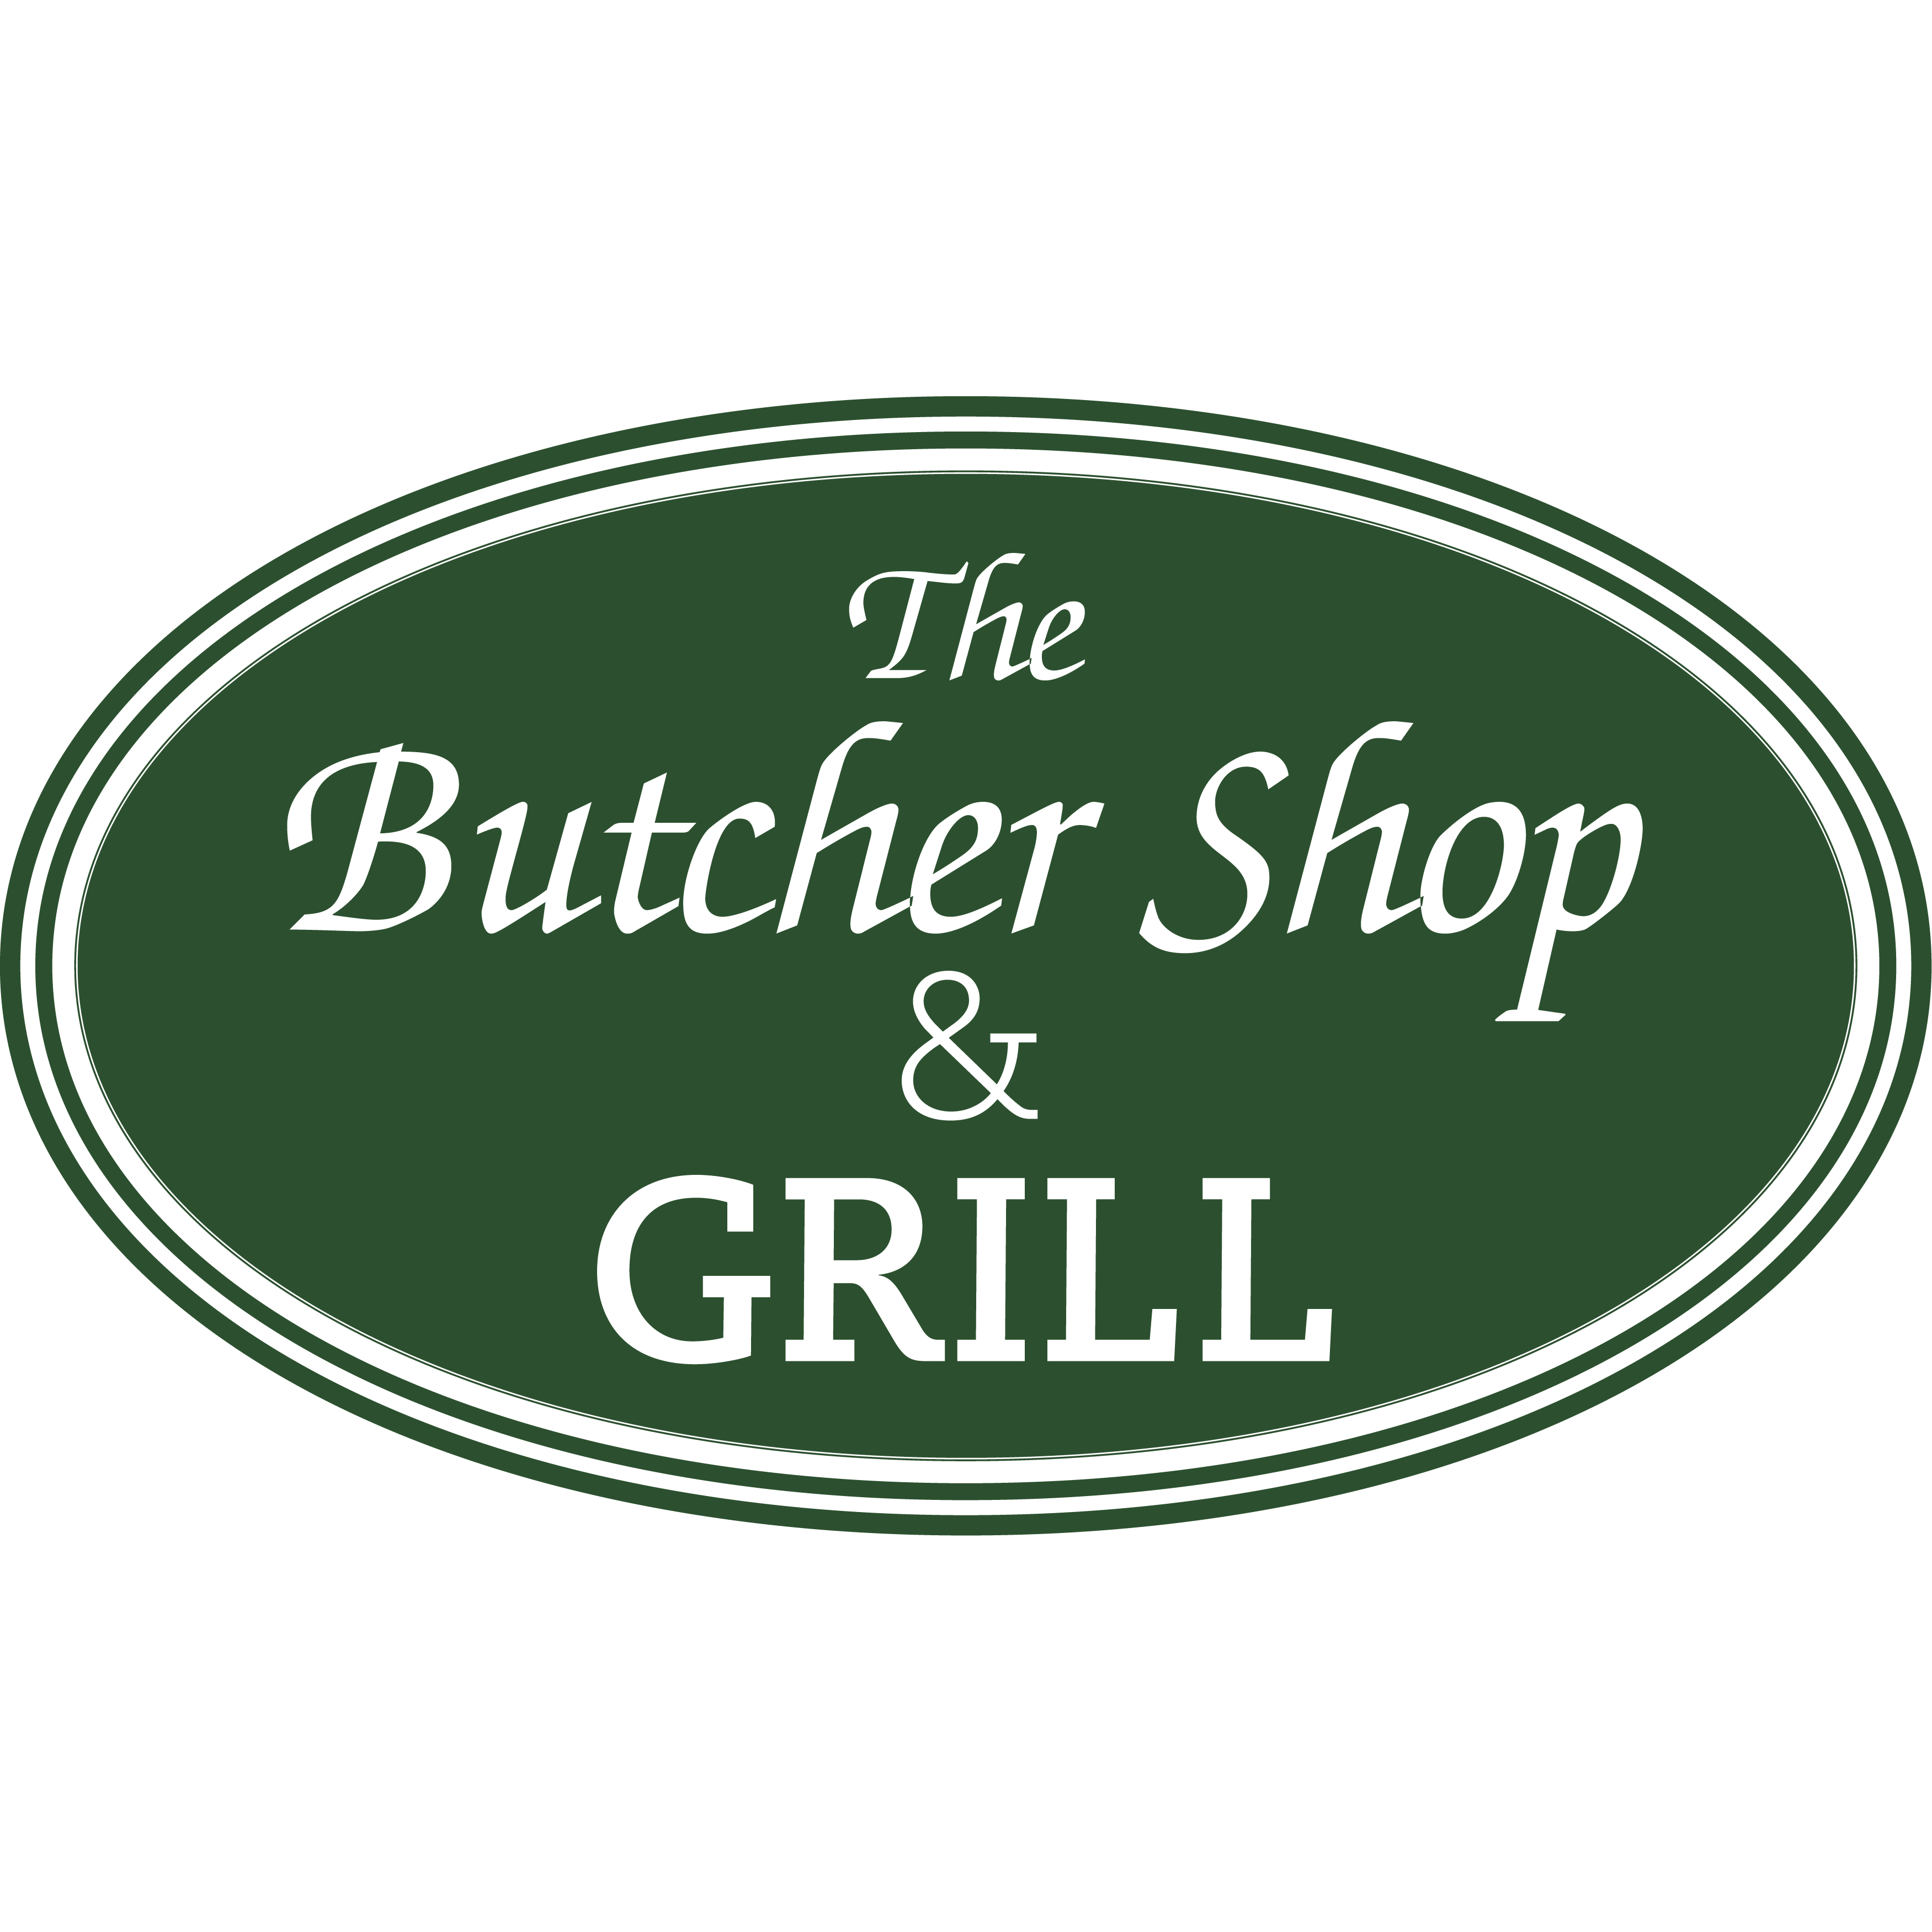 The Butcher Shop & Grill Dubai 04 428 1375